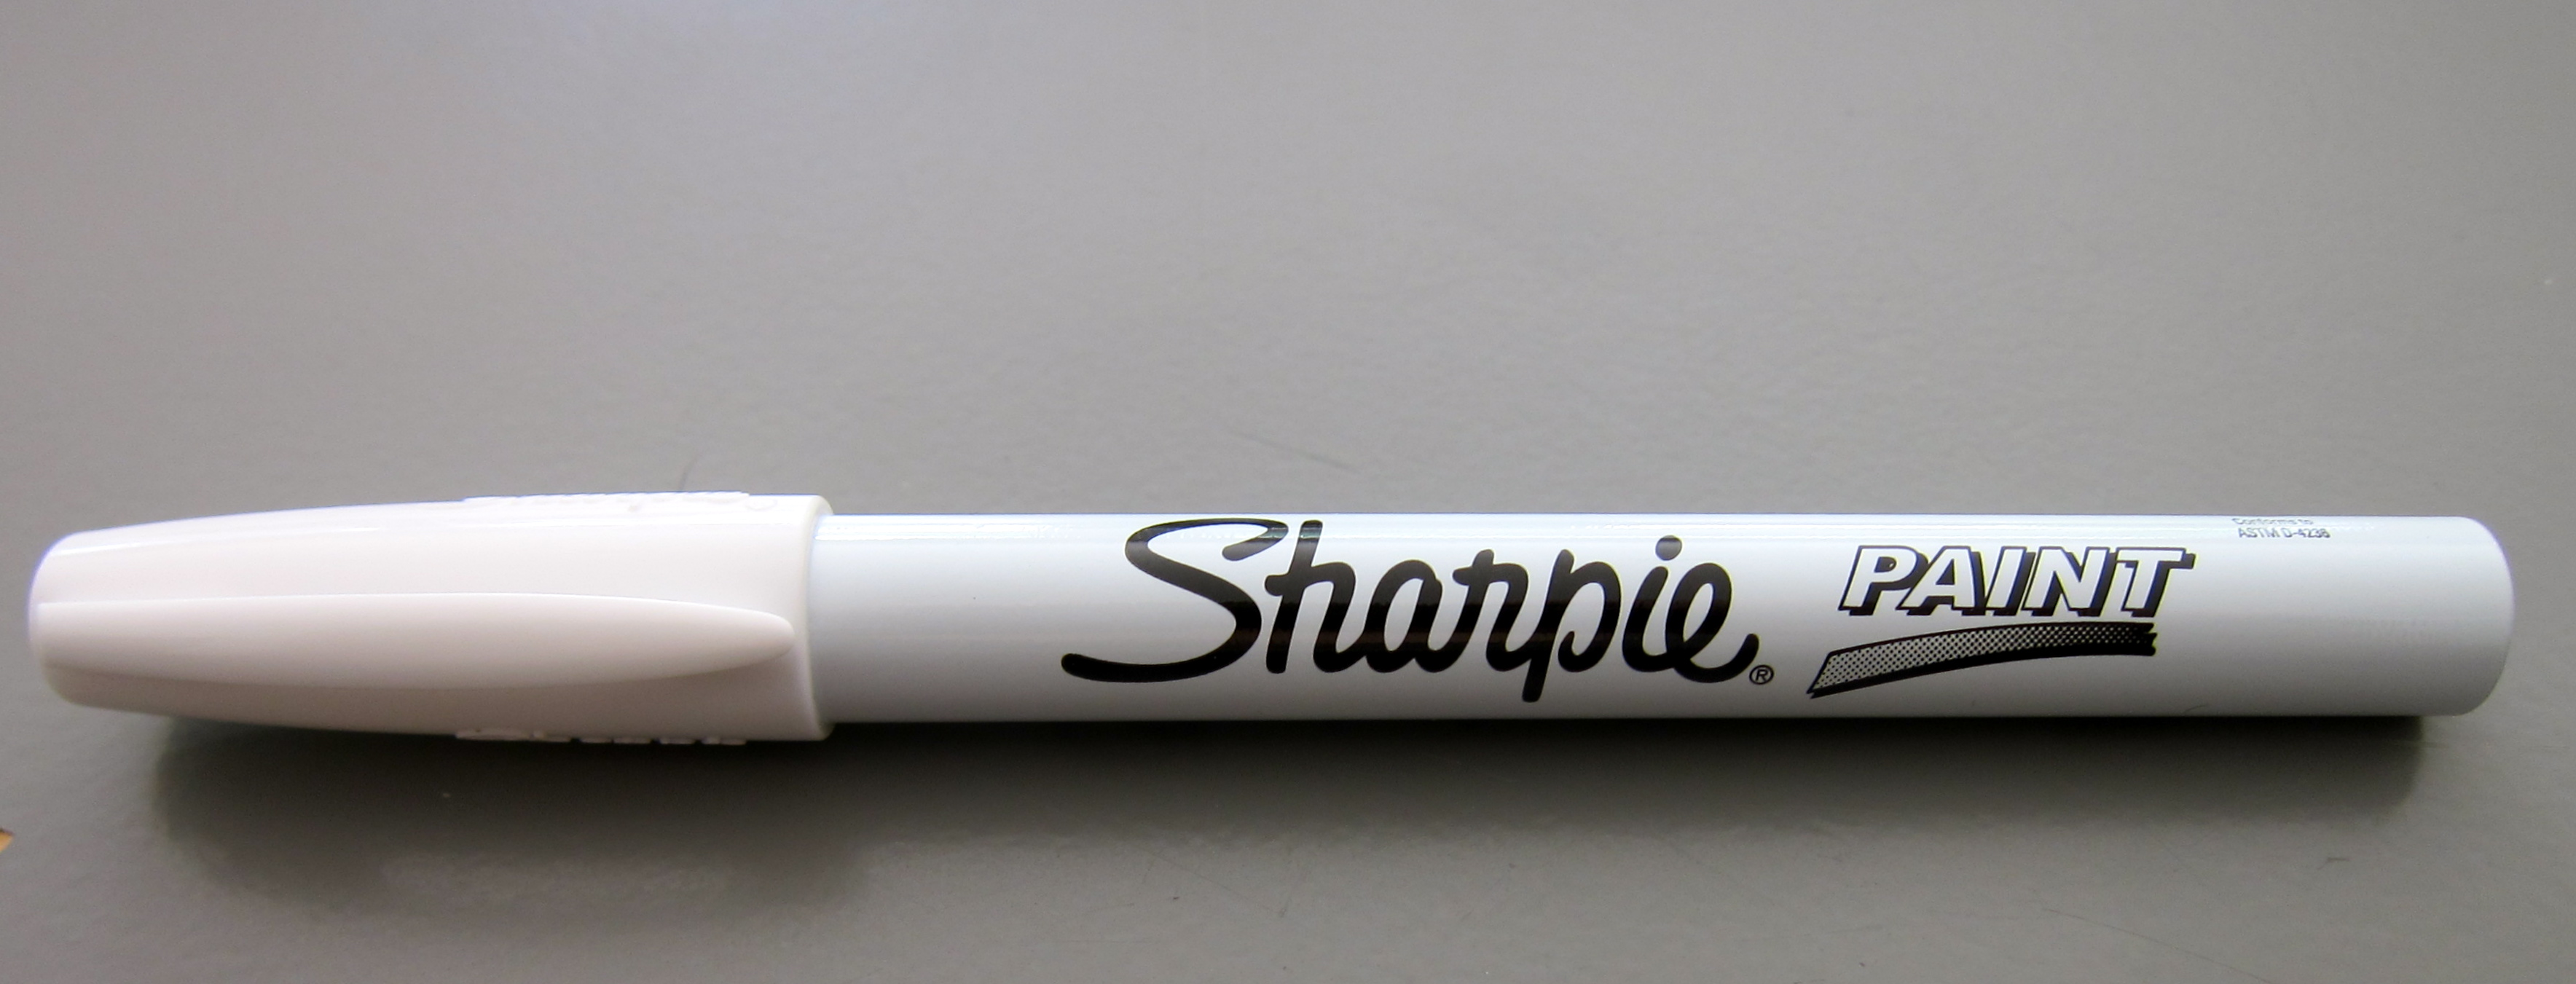 REVIEW Sharpie White Paint Marker Pentulant